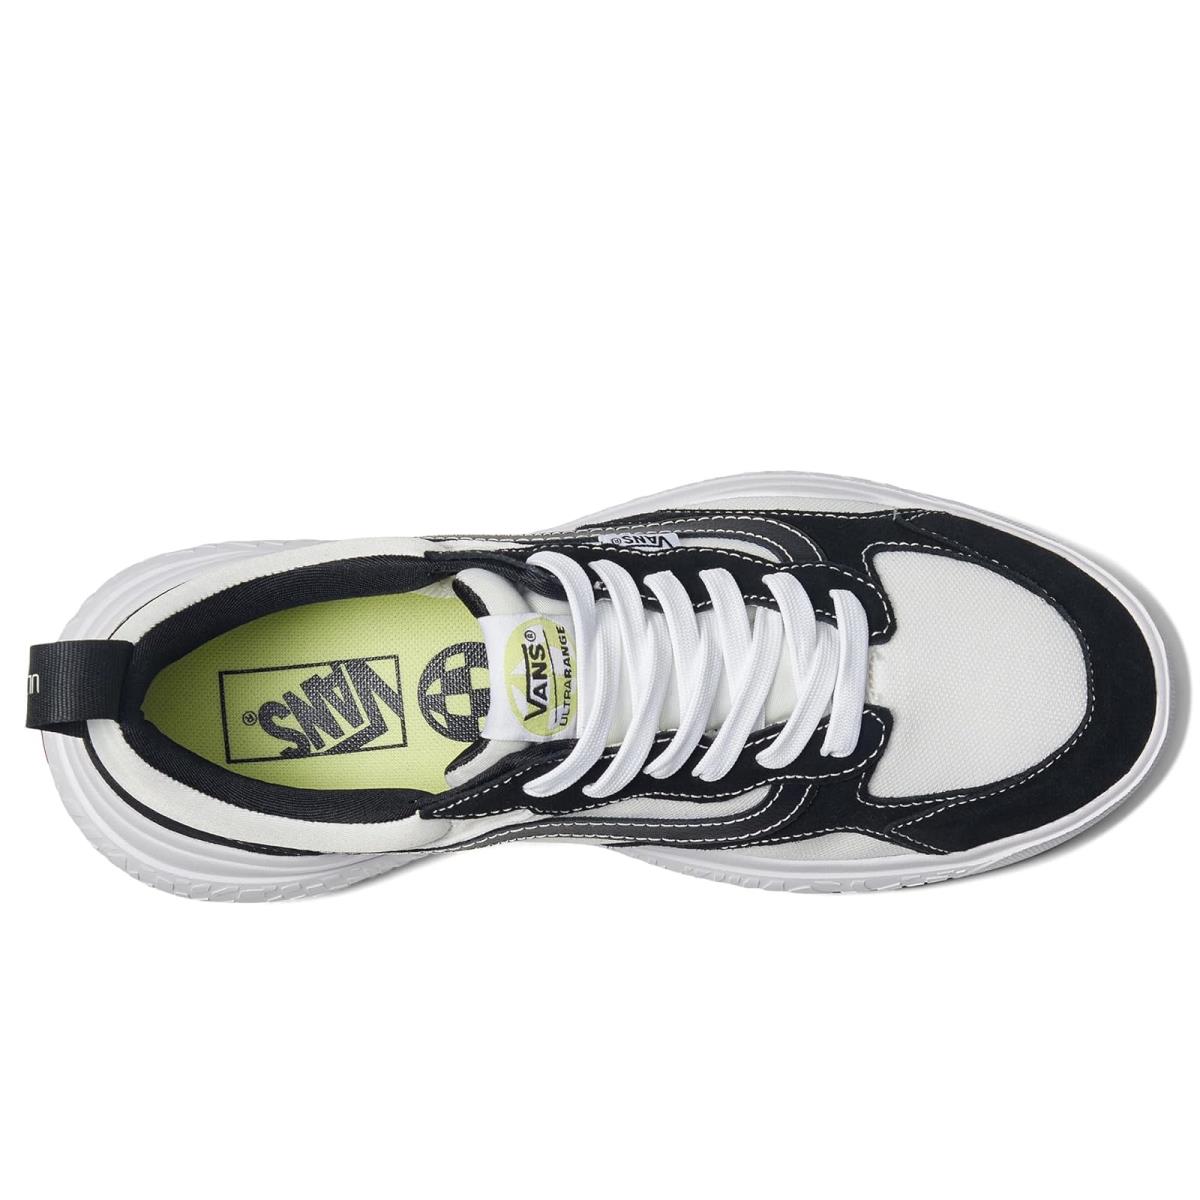 Unisex Sneakers Athletic Shoes Vans Ultrarange Neo Vr3 - Black/Black/Marshmallow